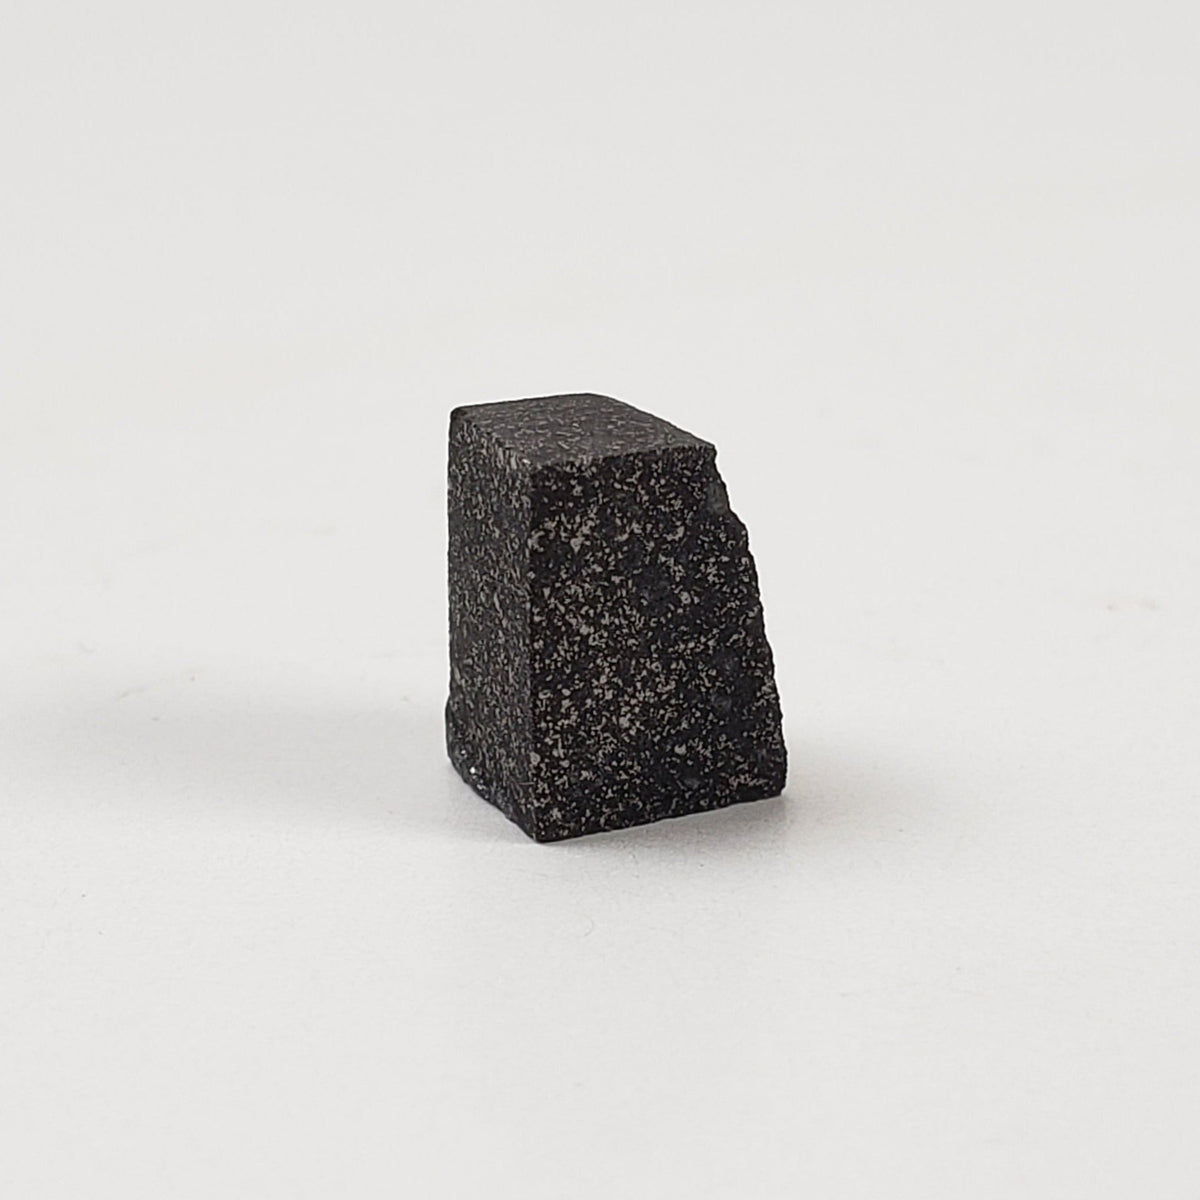 Abee Meteorite | 0.6gr | Part Slice | Rare Enstatite | EH4 Class | Observed Fall 1952 Canada